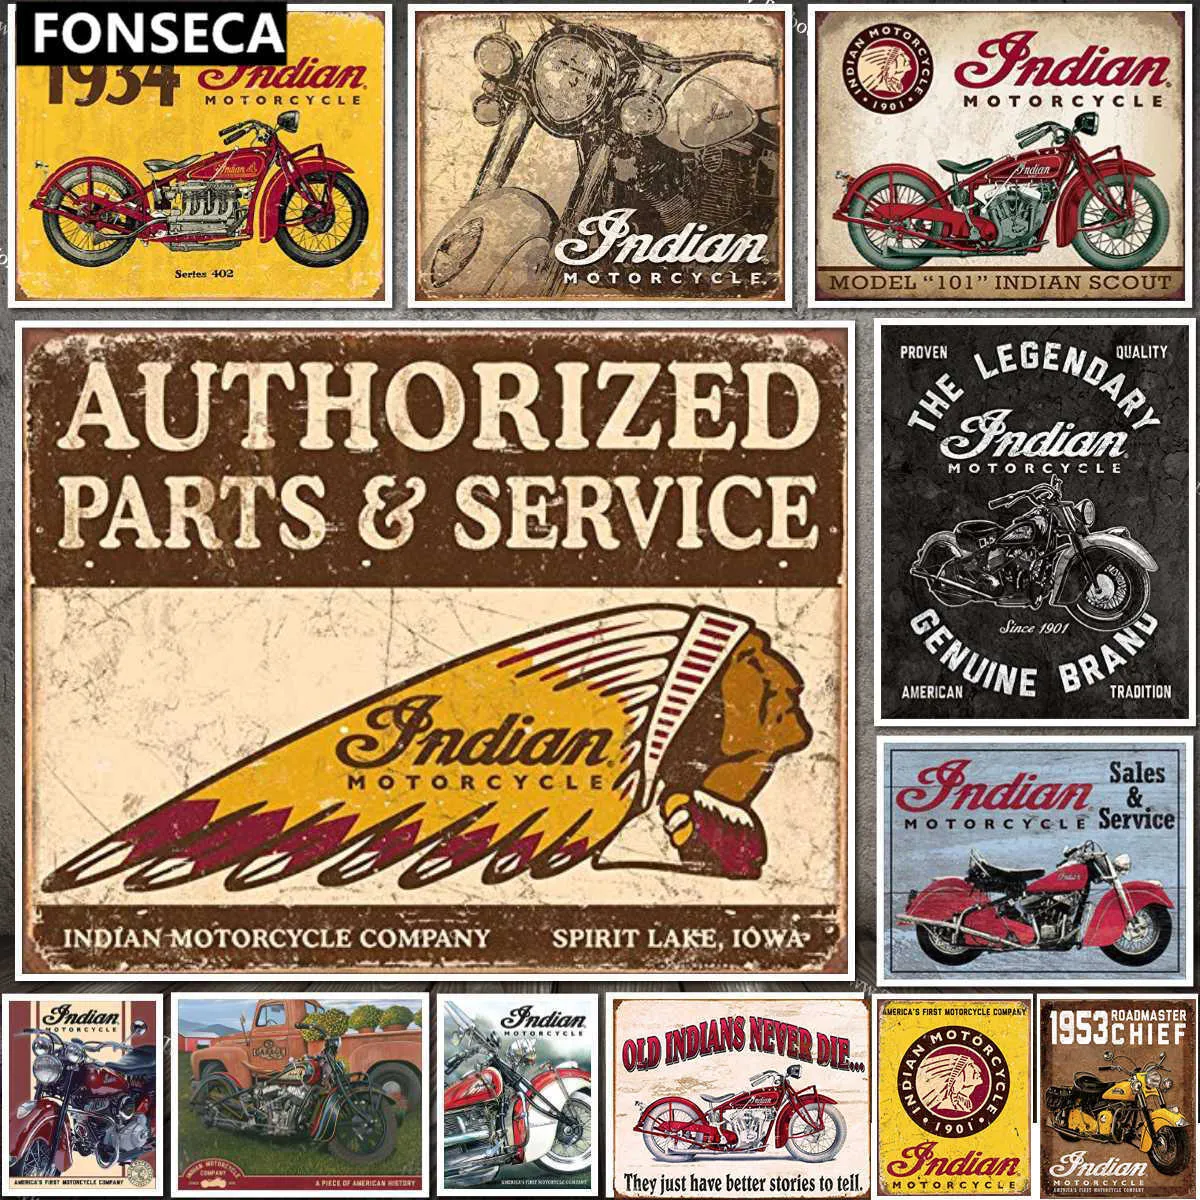 Tradicional Indian Motor Tin Sign Classic Vintage Motorcycle Club Garage Art Decor Decor de Iron Plates BAR CAFE METAL PLAQUES9724276